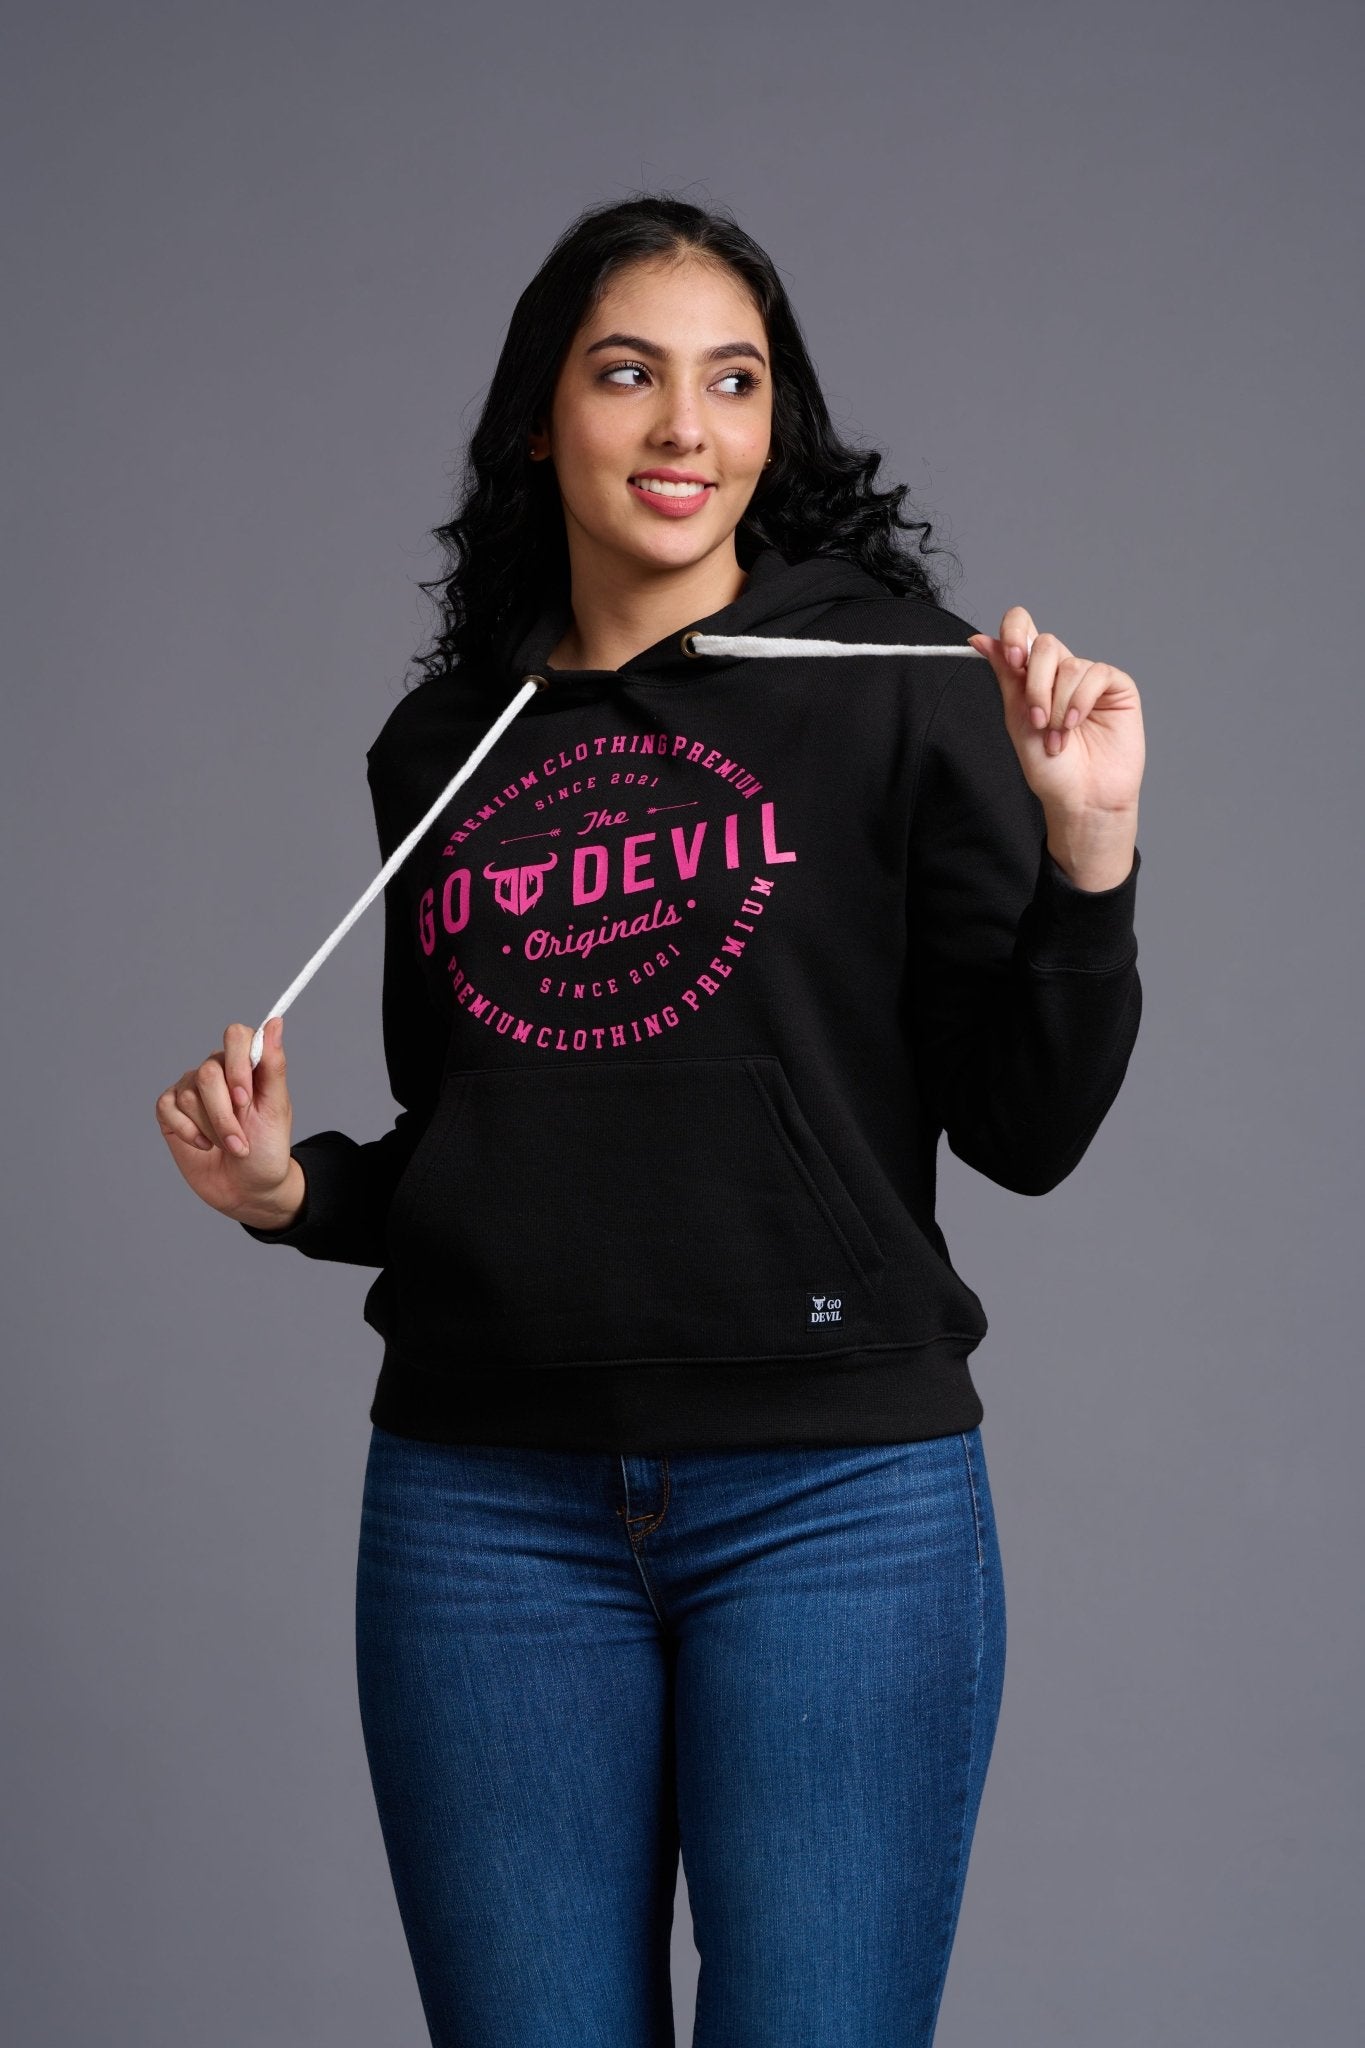 Go Devil Originals (in Pink) Printed Black Hoodie for Women - Go Devil